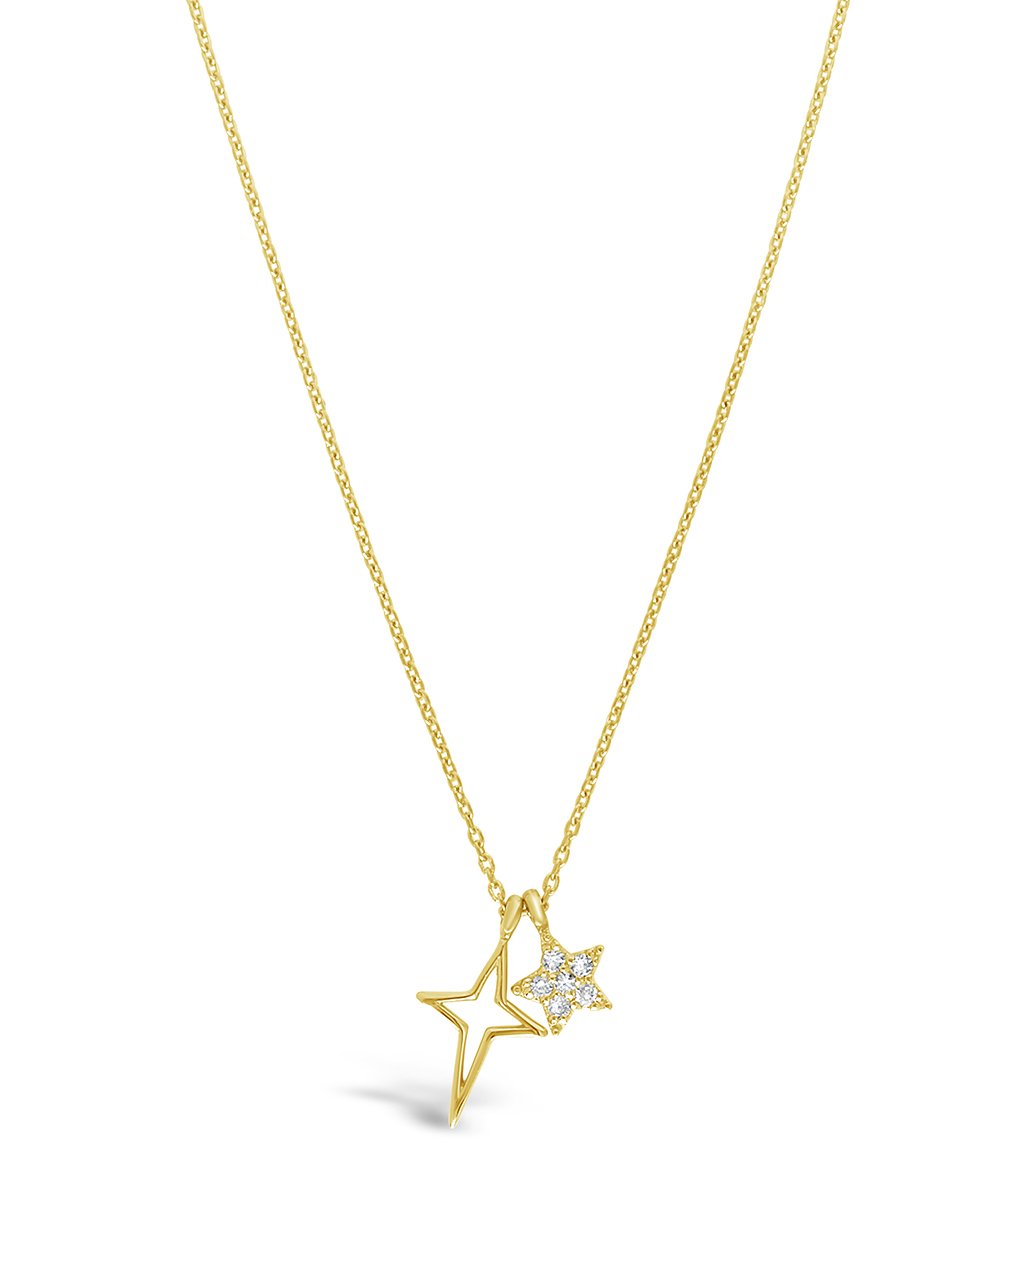 Sterling Silver CZ Star & Burst Charm Necklace - Sterling Forever